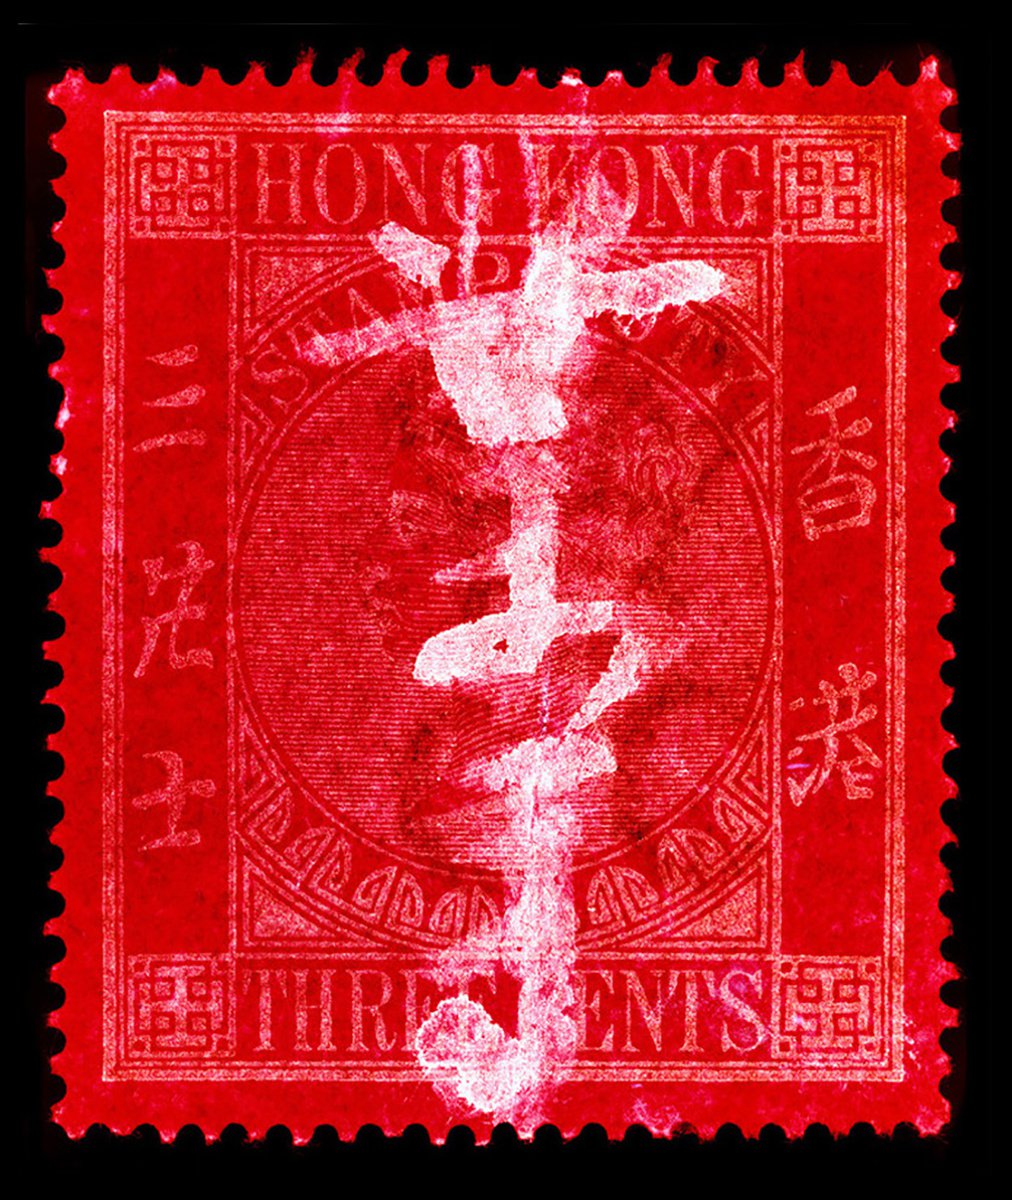 Heidler & Heeps Hong Kong Stamp Collection 